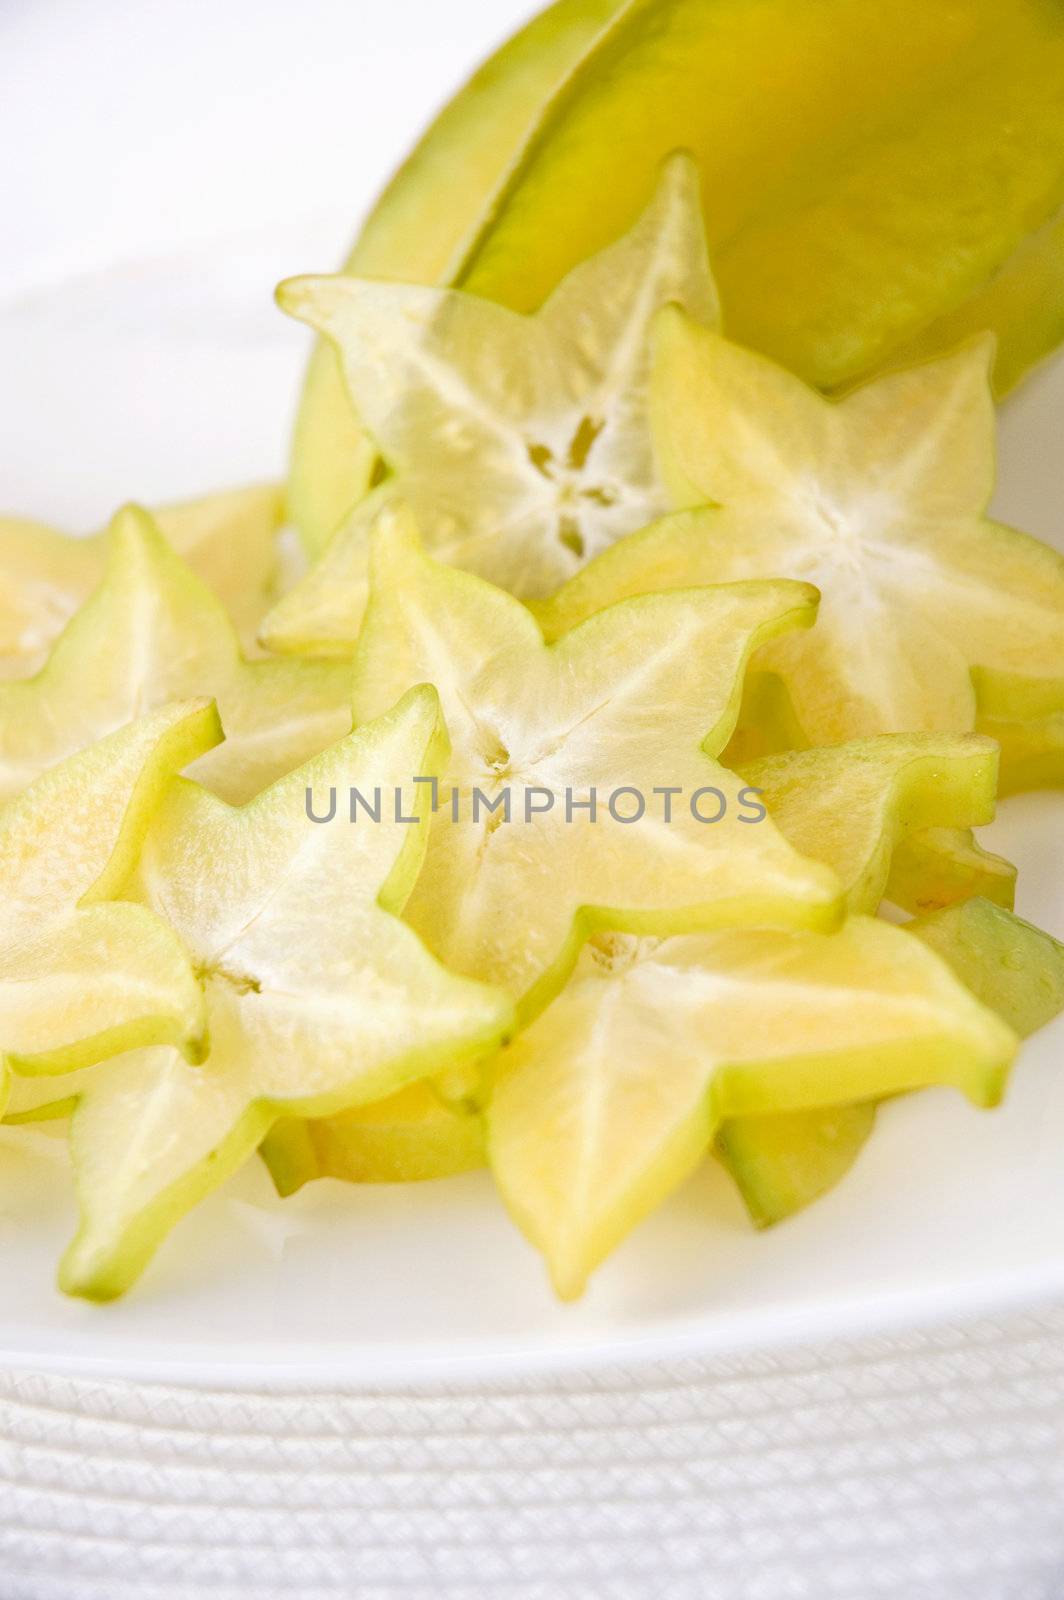 starfruit on plate by daniaphoto